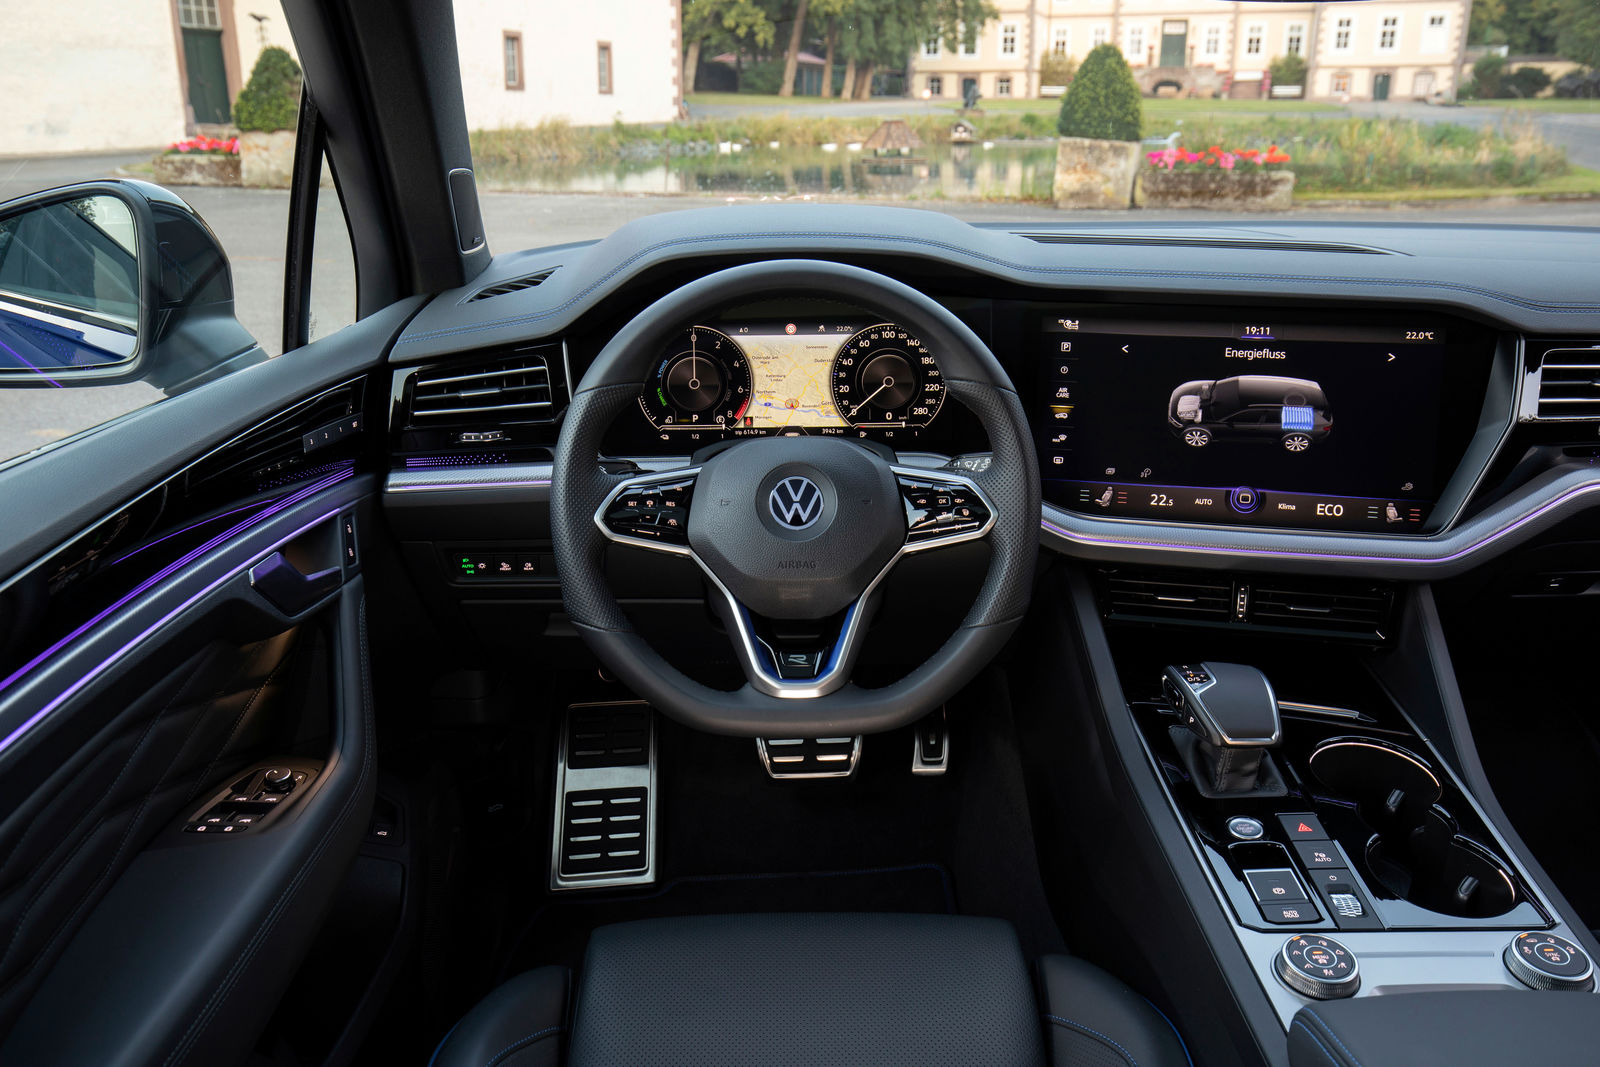 Volkswagen Touareg Driving, Engines & Performance